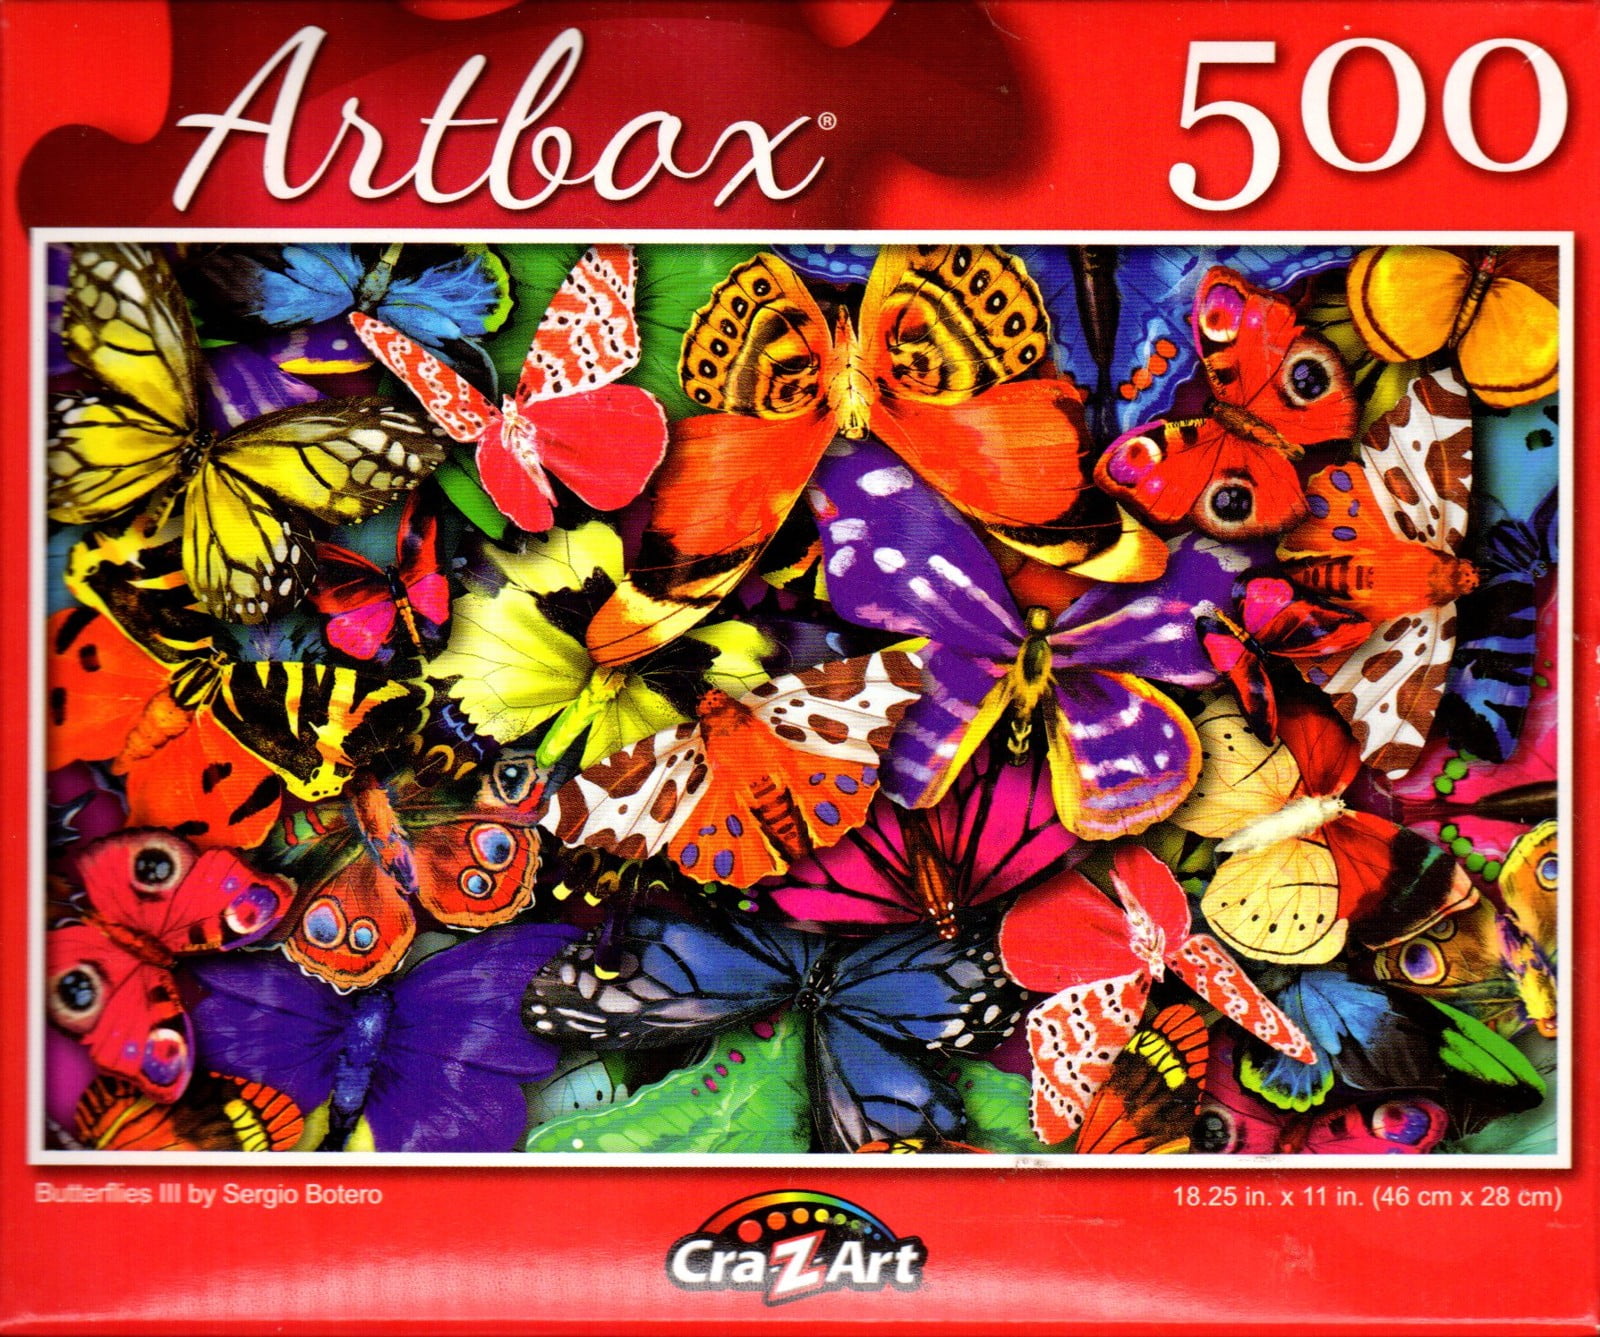 NEW Artbox 500 Piece Jigsaw Puzzle ~ Big Cats by Sergio Botero 